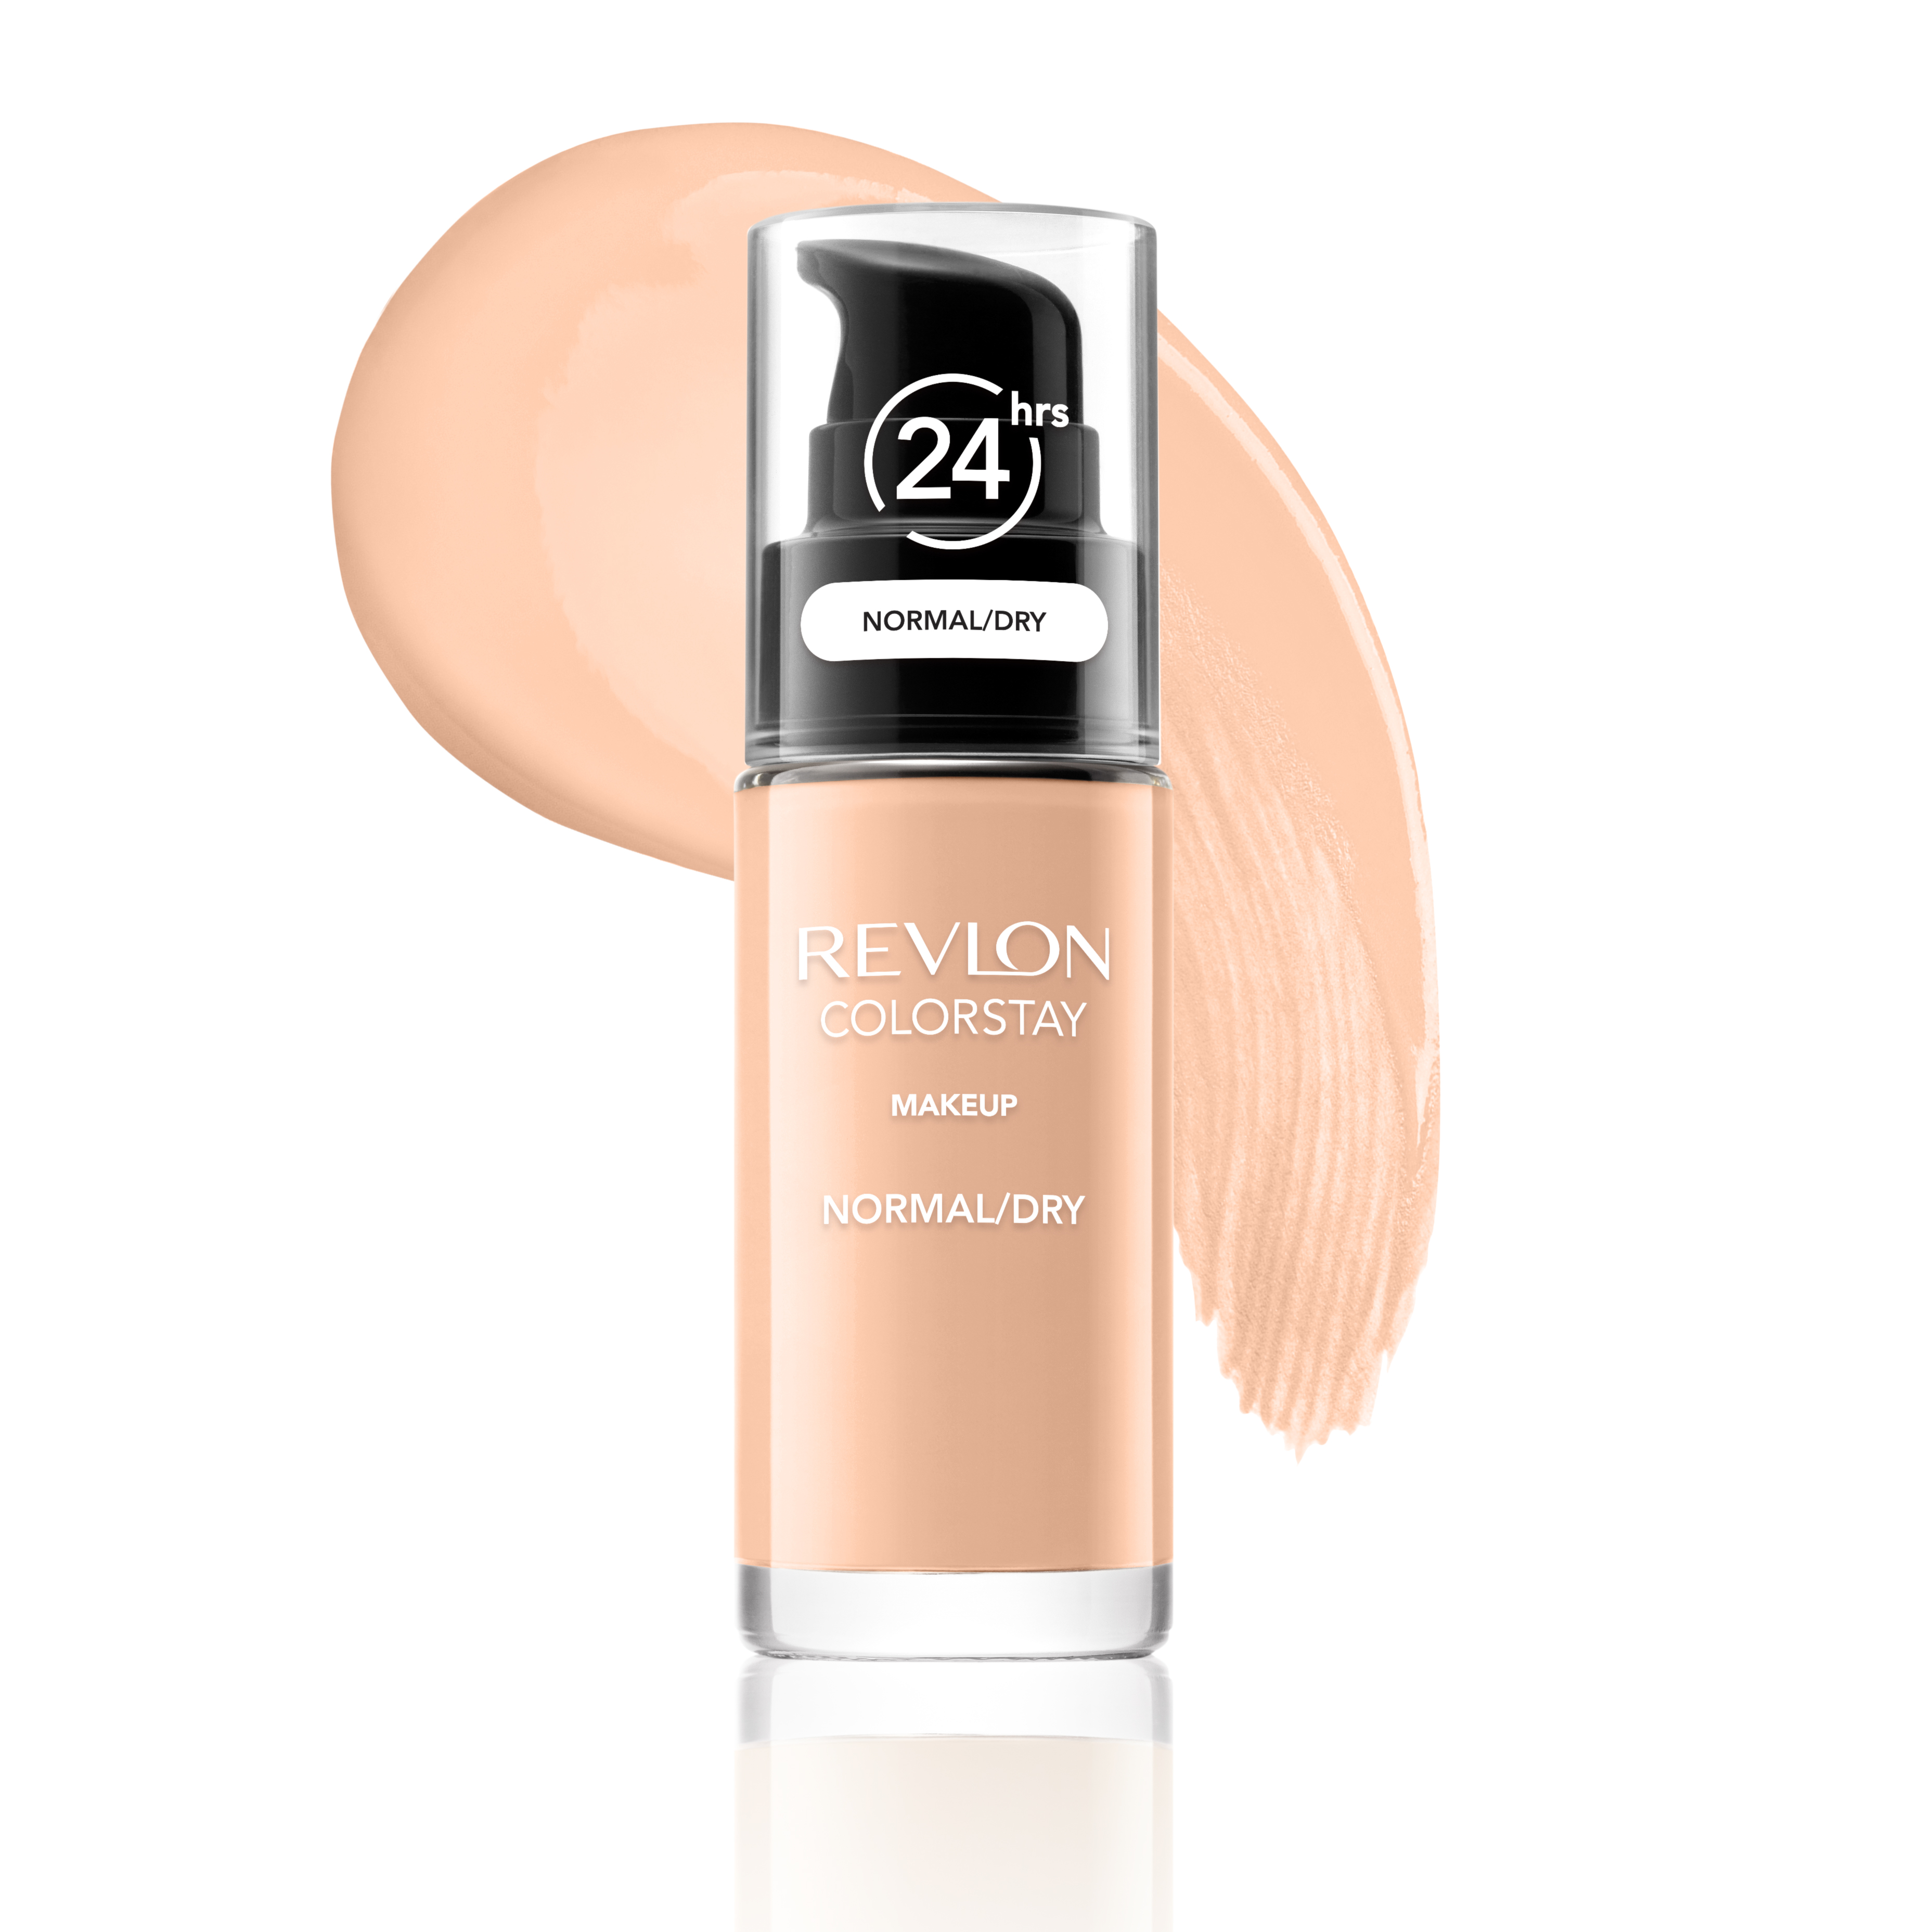 Revlon Colorstay Makeup Normal/Dry Natural Beige | gogobli